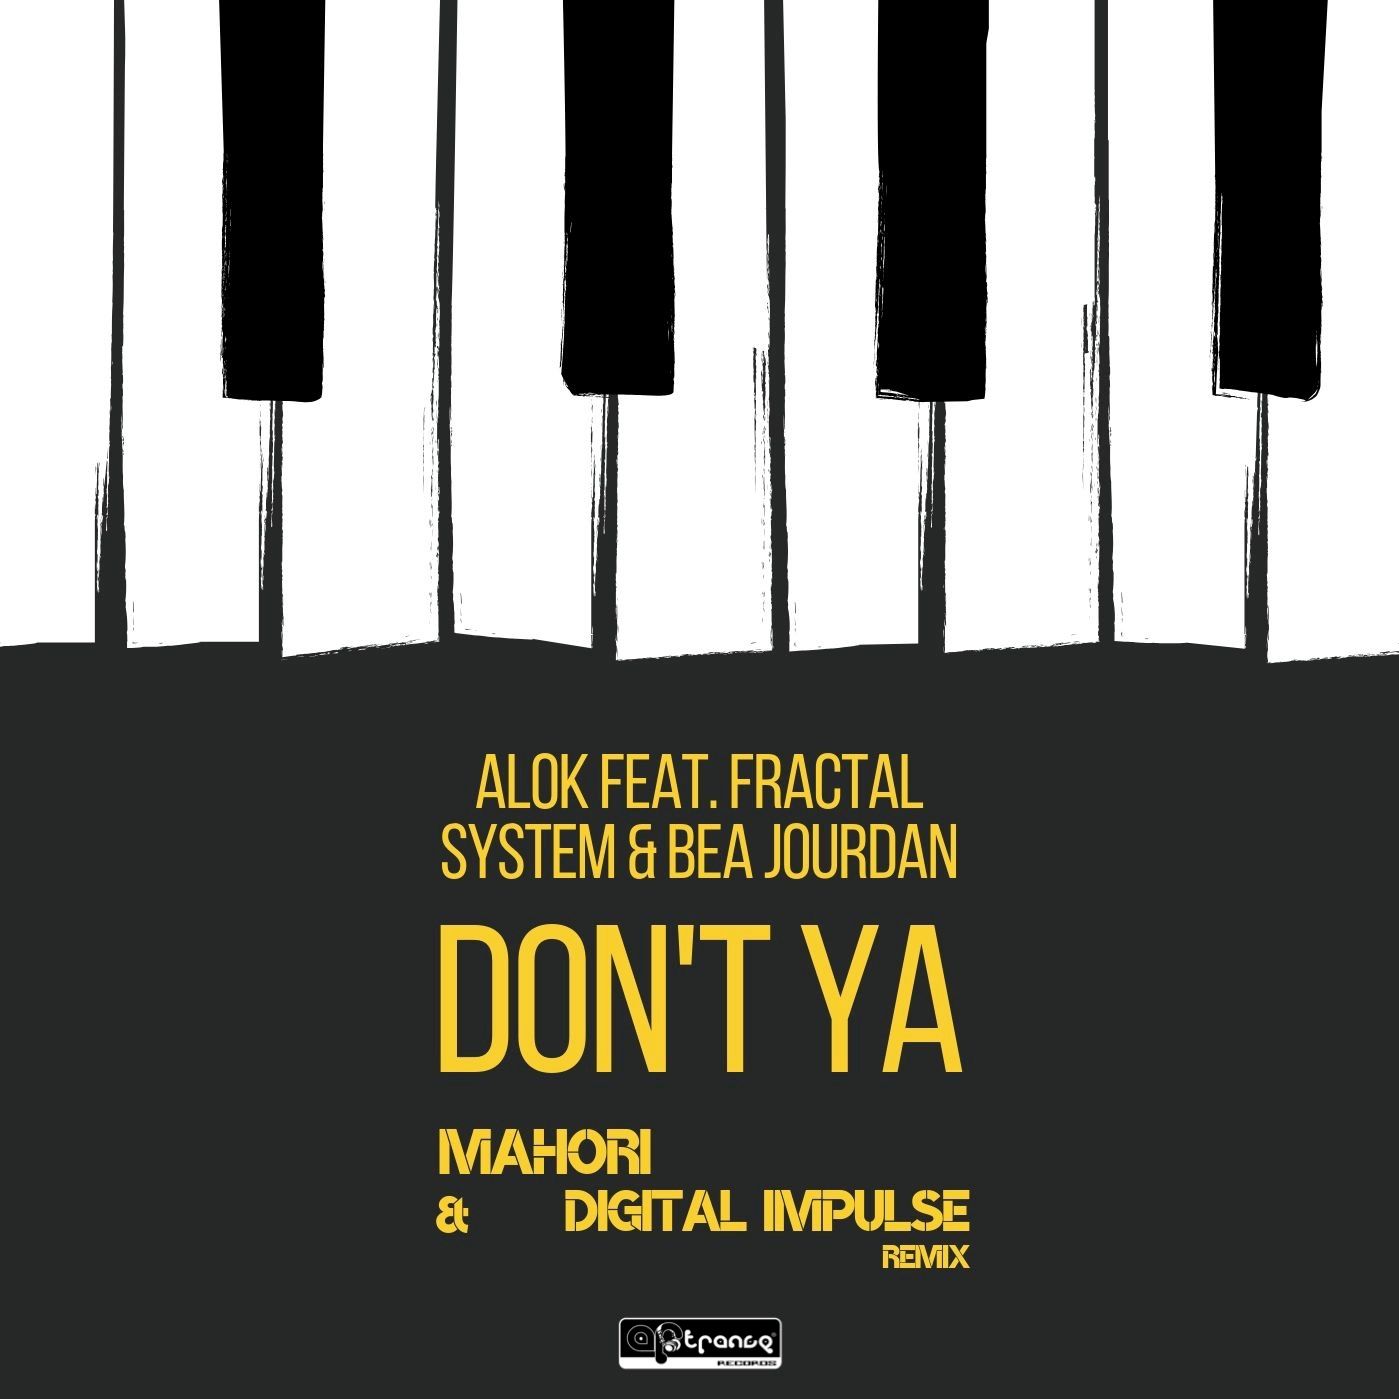 Descarca Alok & Fractal System ft Bea Jourdan - Don't Ya (Mahori & Digital Impulse remix) ★FREE DOWNLOAD★